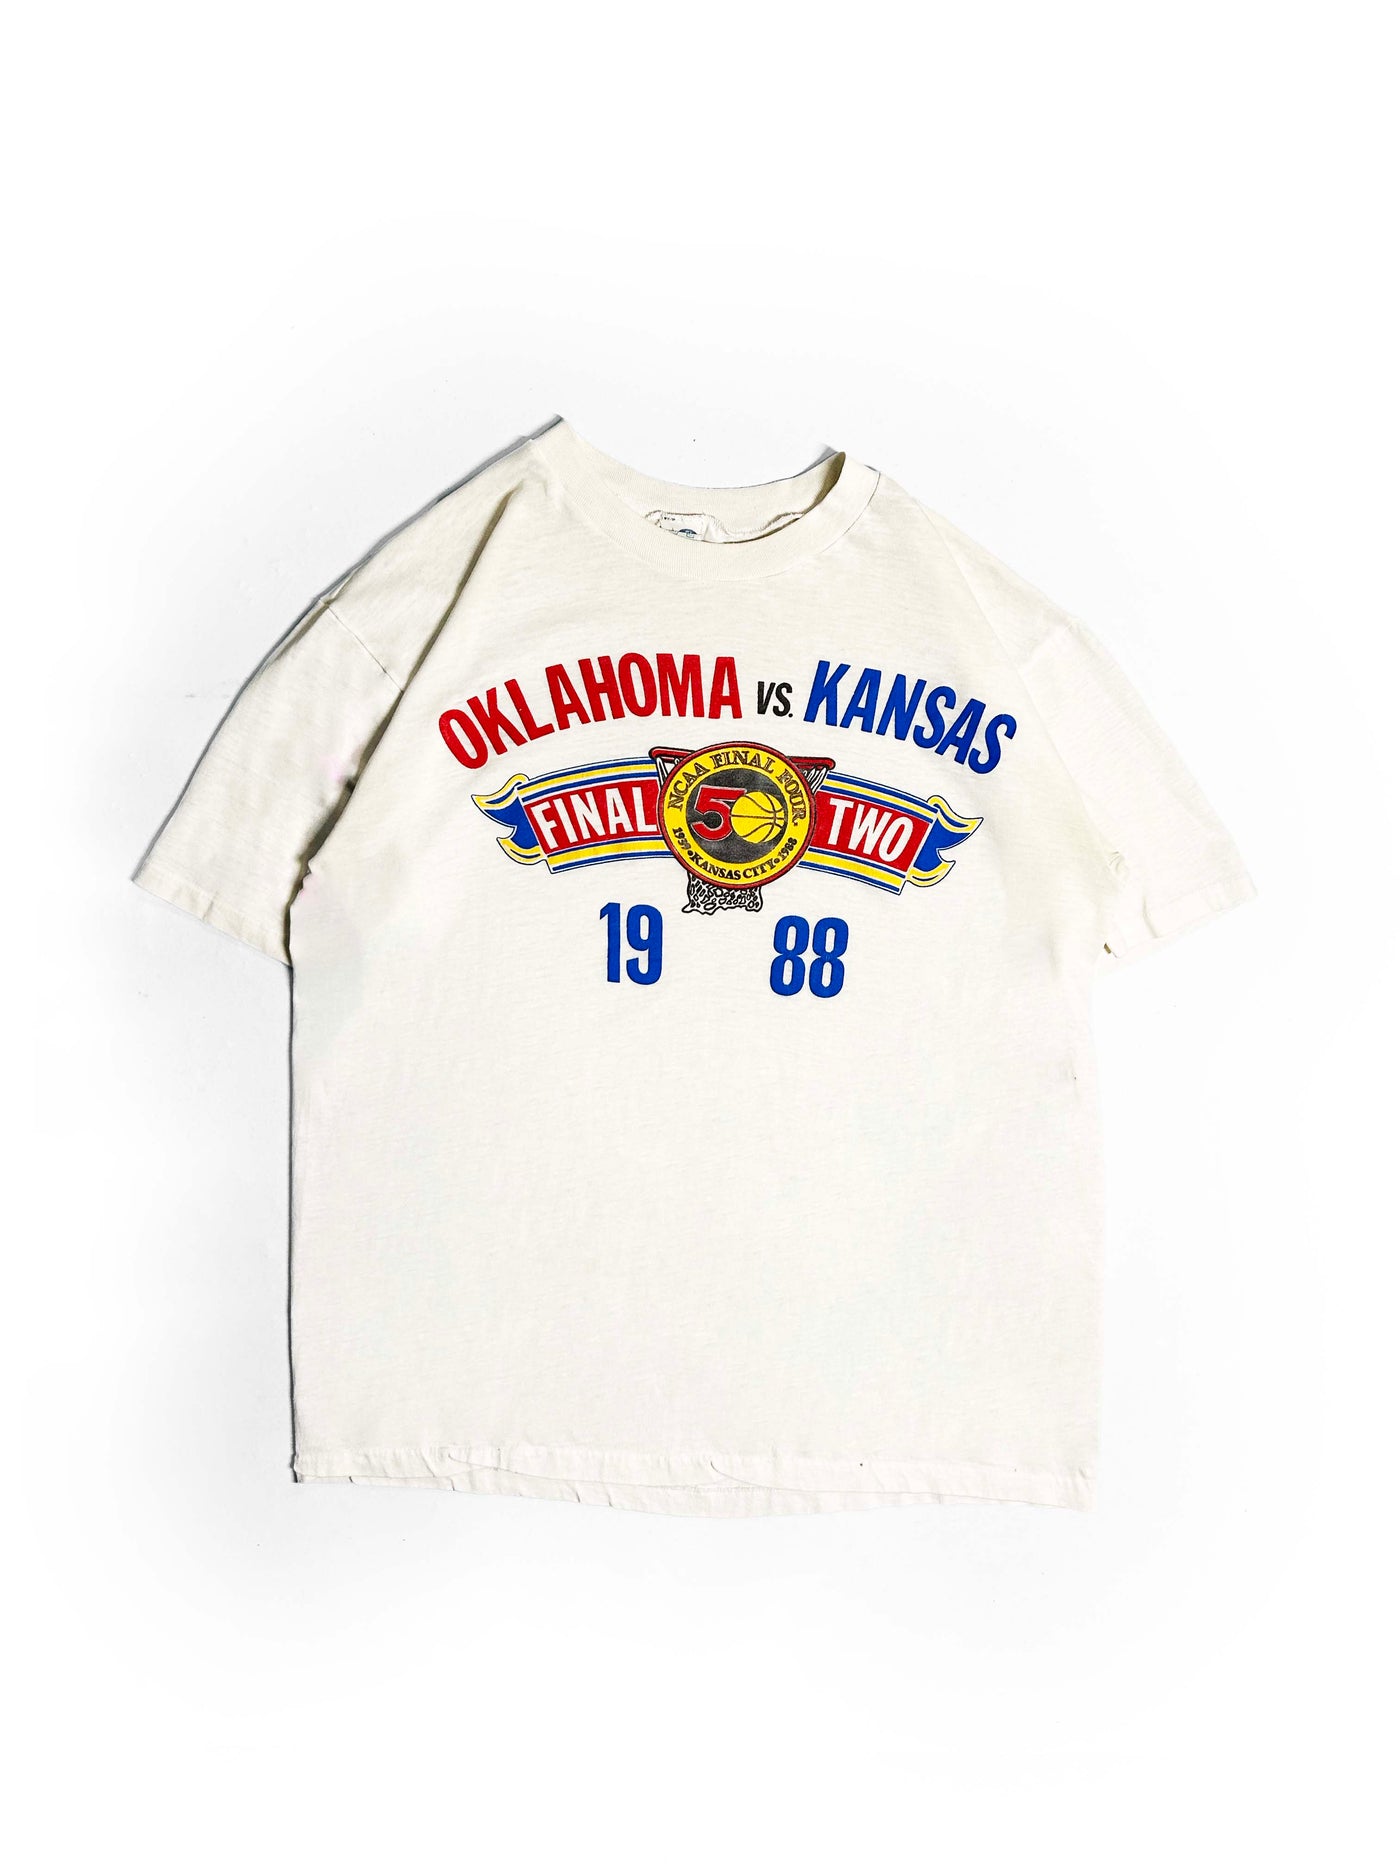 Vintage 1988 Oklahoma vs Kansas Final 2 T-Shirt